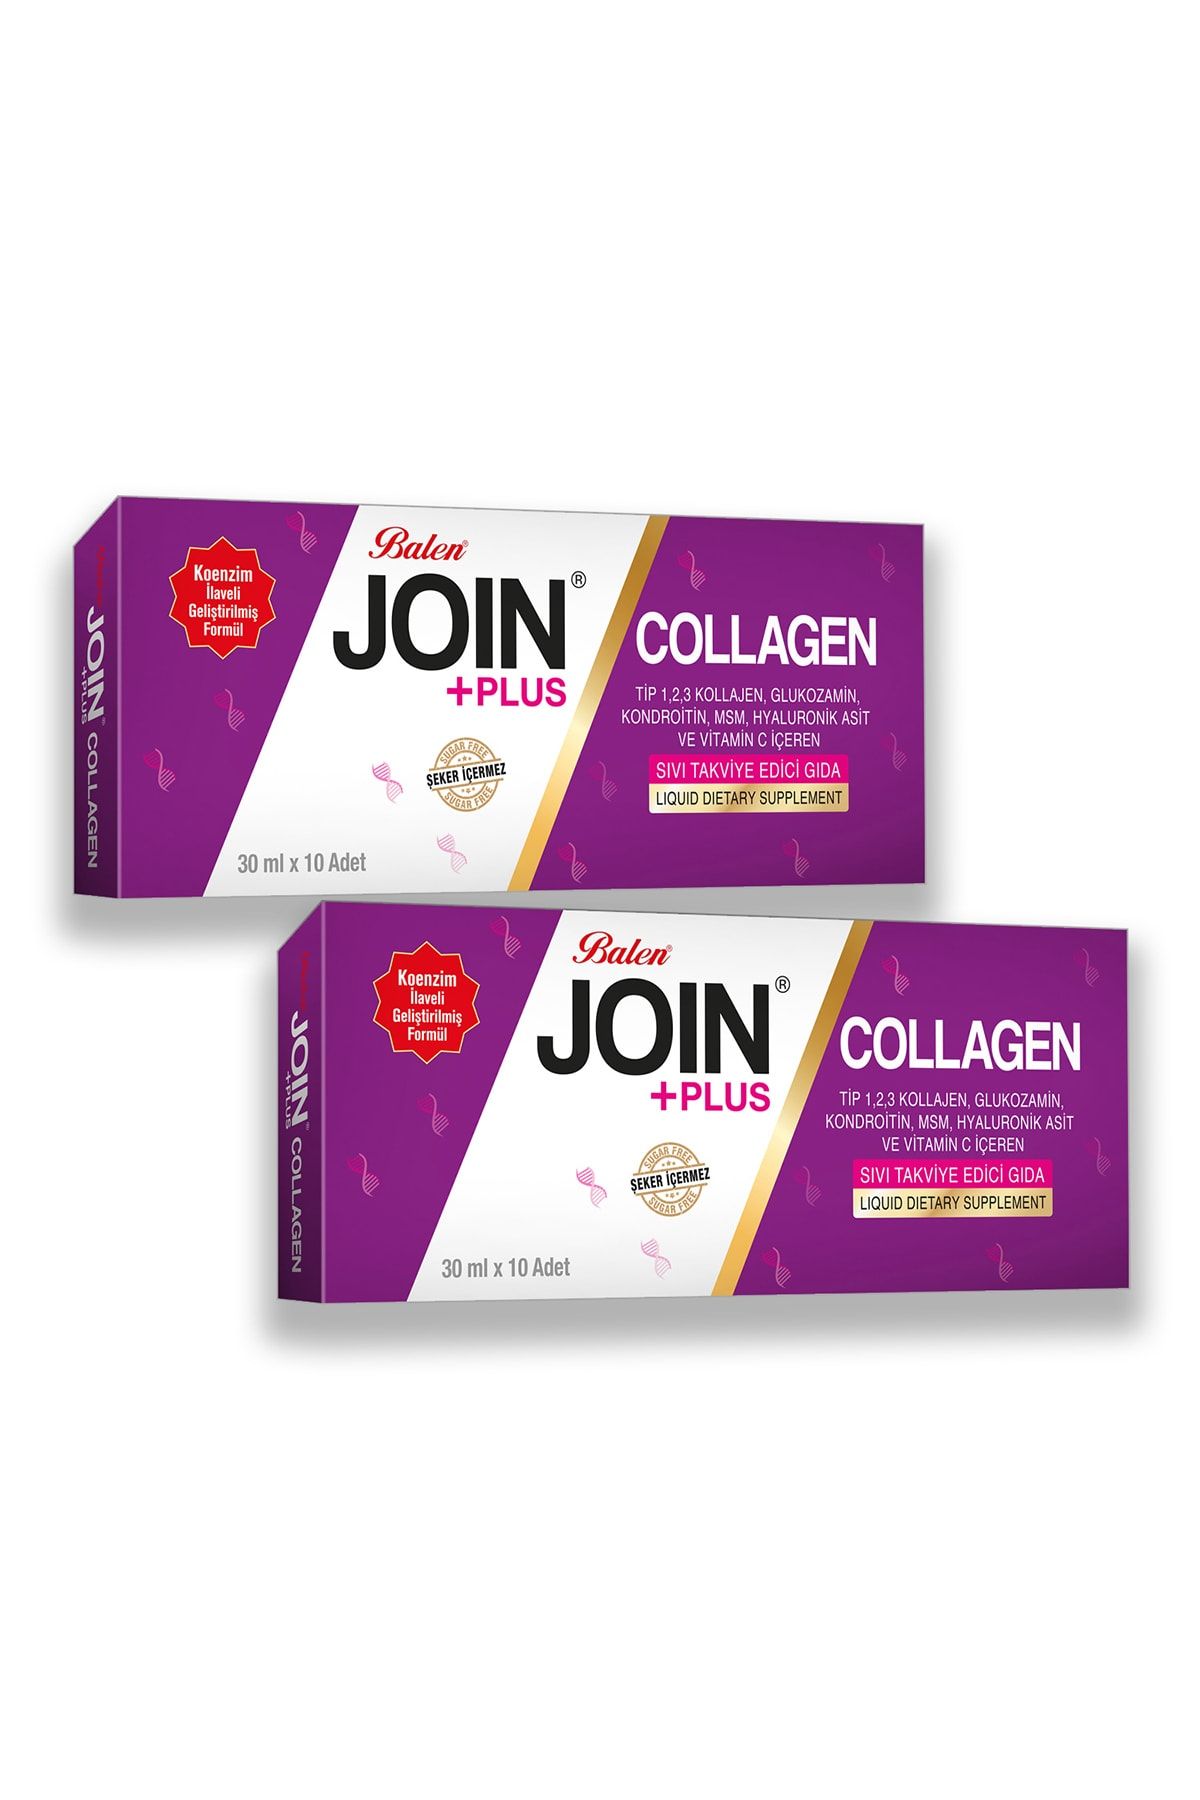 Join Us Balen Join+plus Collagen